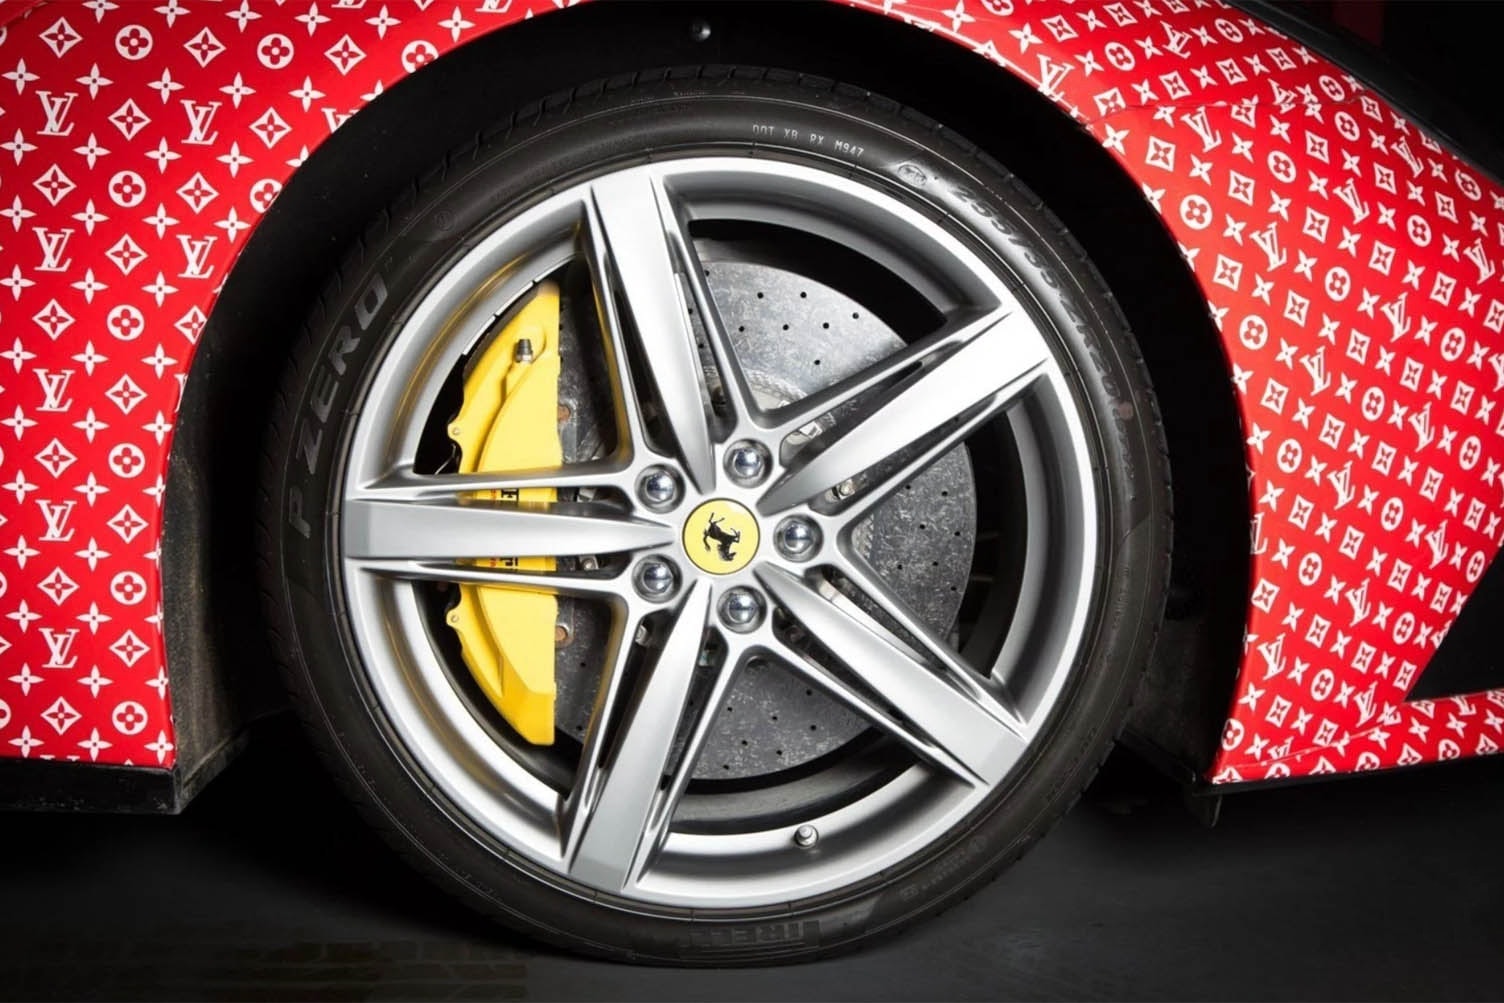 杜拜富童 Money Kicks 出售 Ferrari F12 Berlinetta「Supreme x Louis Vuitton」定製跑車